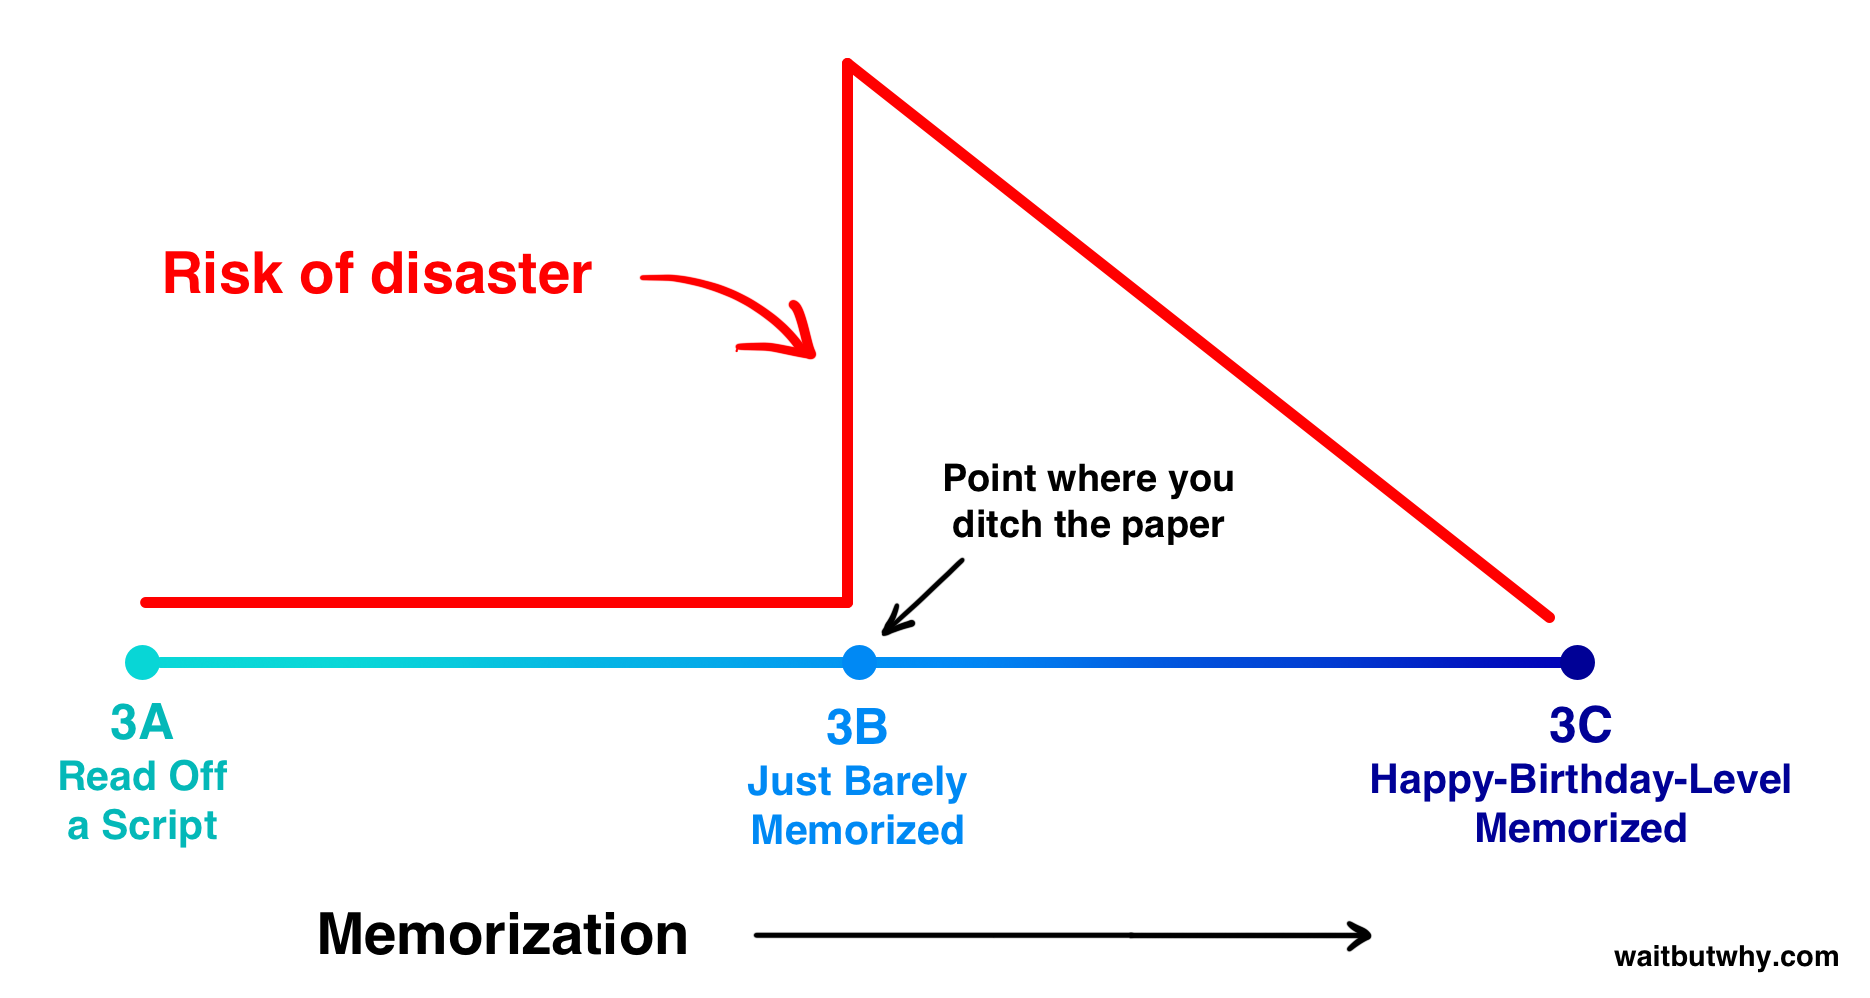 Memorization risk graph where just barely memorized has the highest risk of disaster